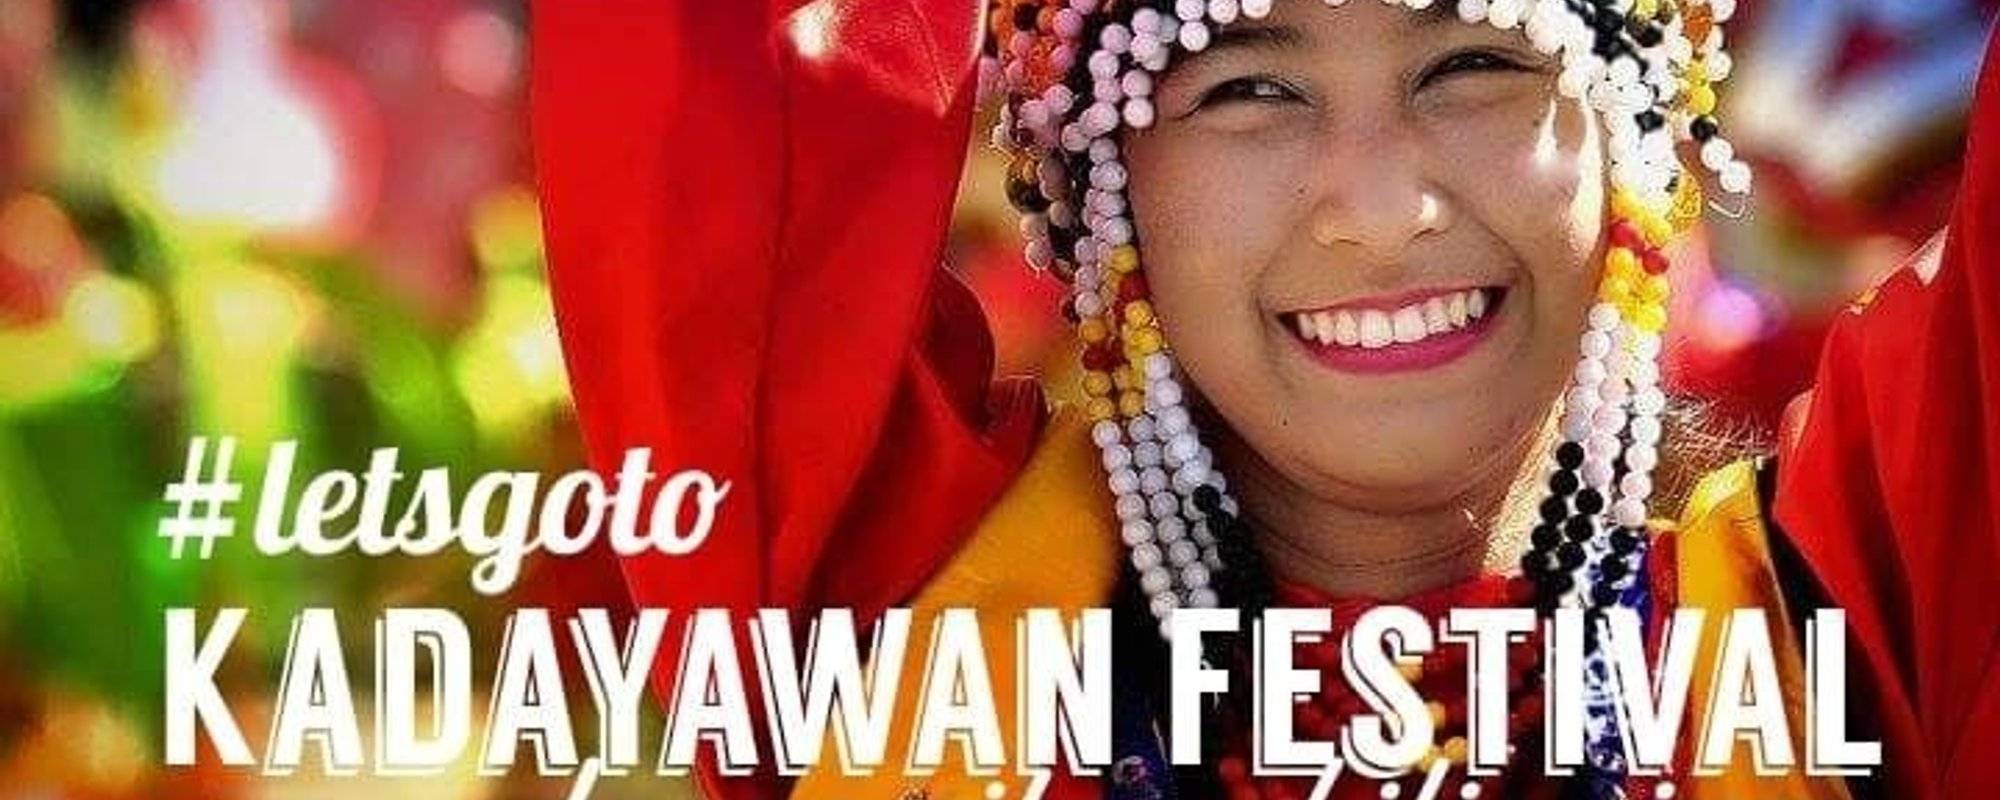 #letsgoto: Kadayawan Festival - Davao City, Philippines